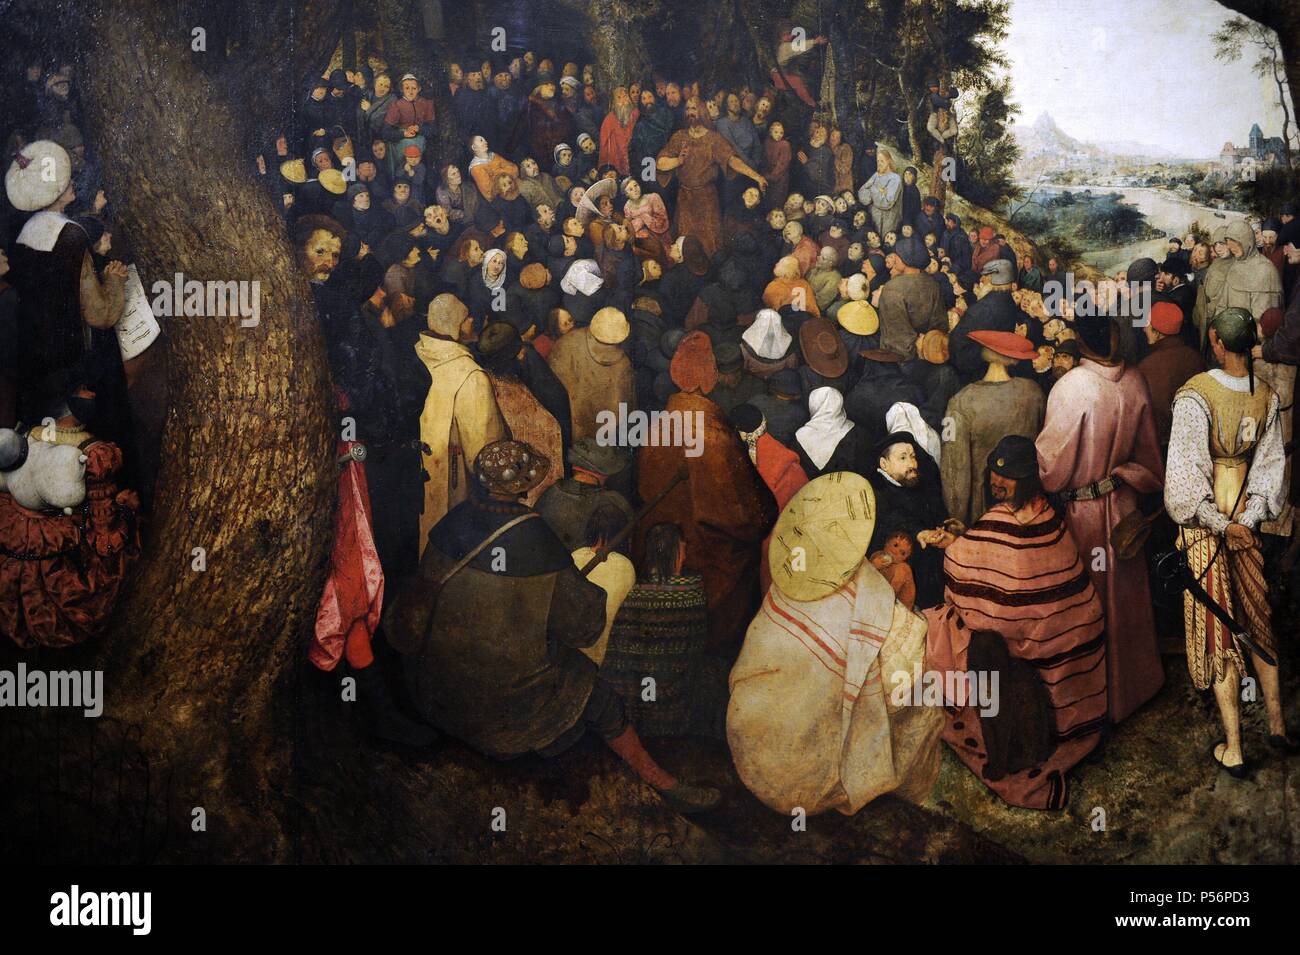 Pieter Brueghel the Elder (c.1525-1569). Flemish painter. The Sermon of Saint John the Baptist. Detail. Museum of Fine Arts. Budapest. Hungary. Stock Photo